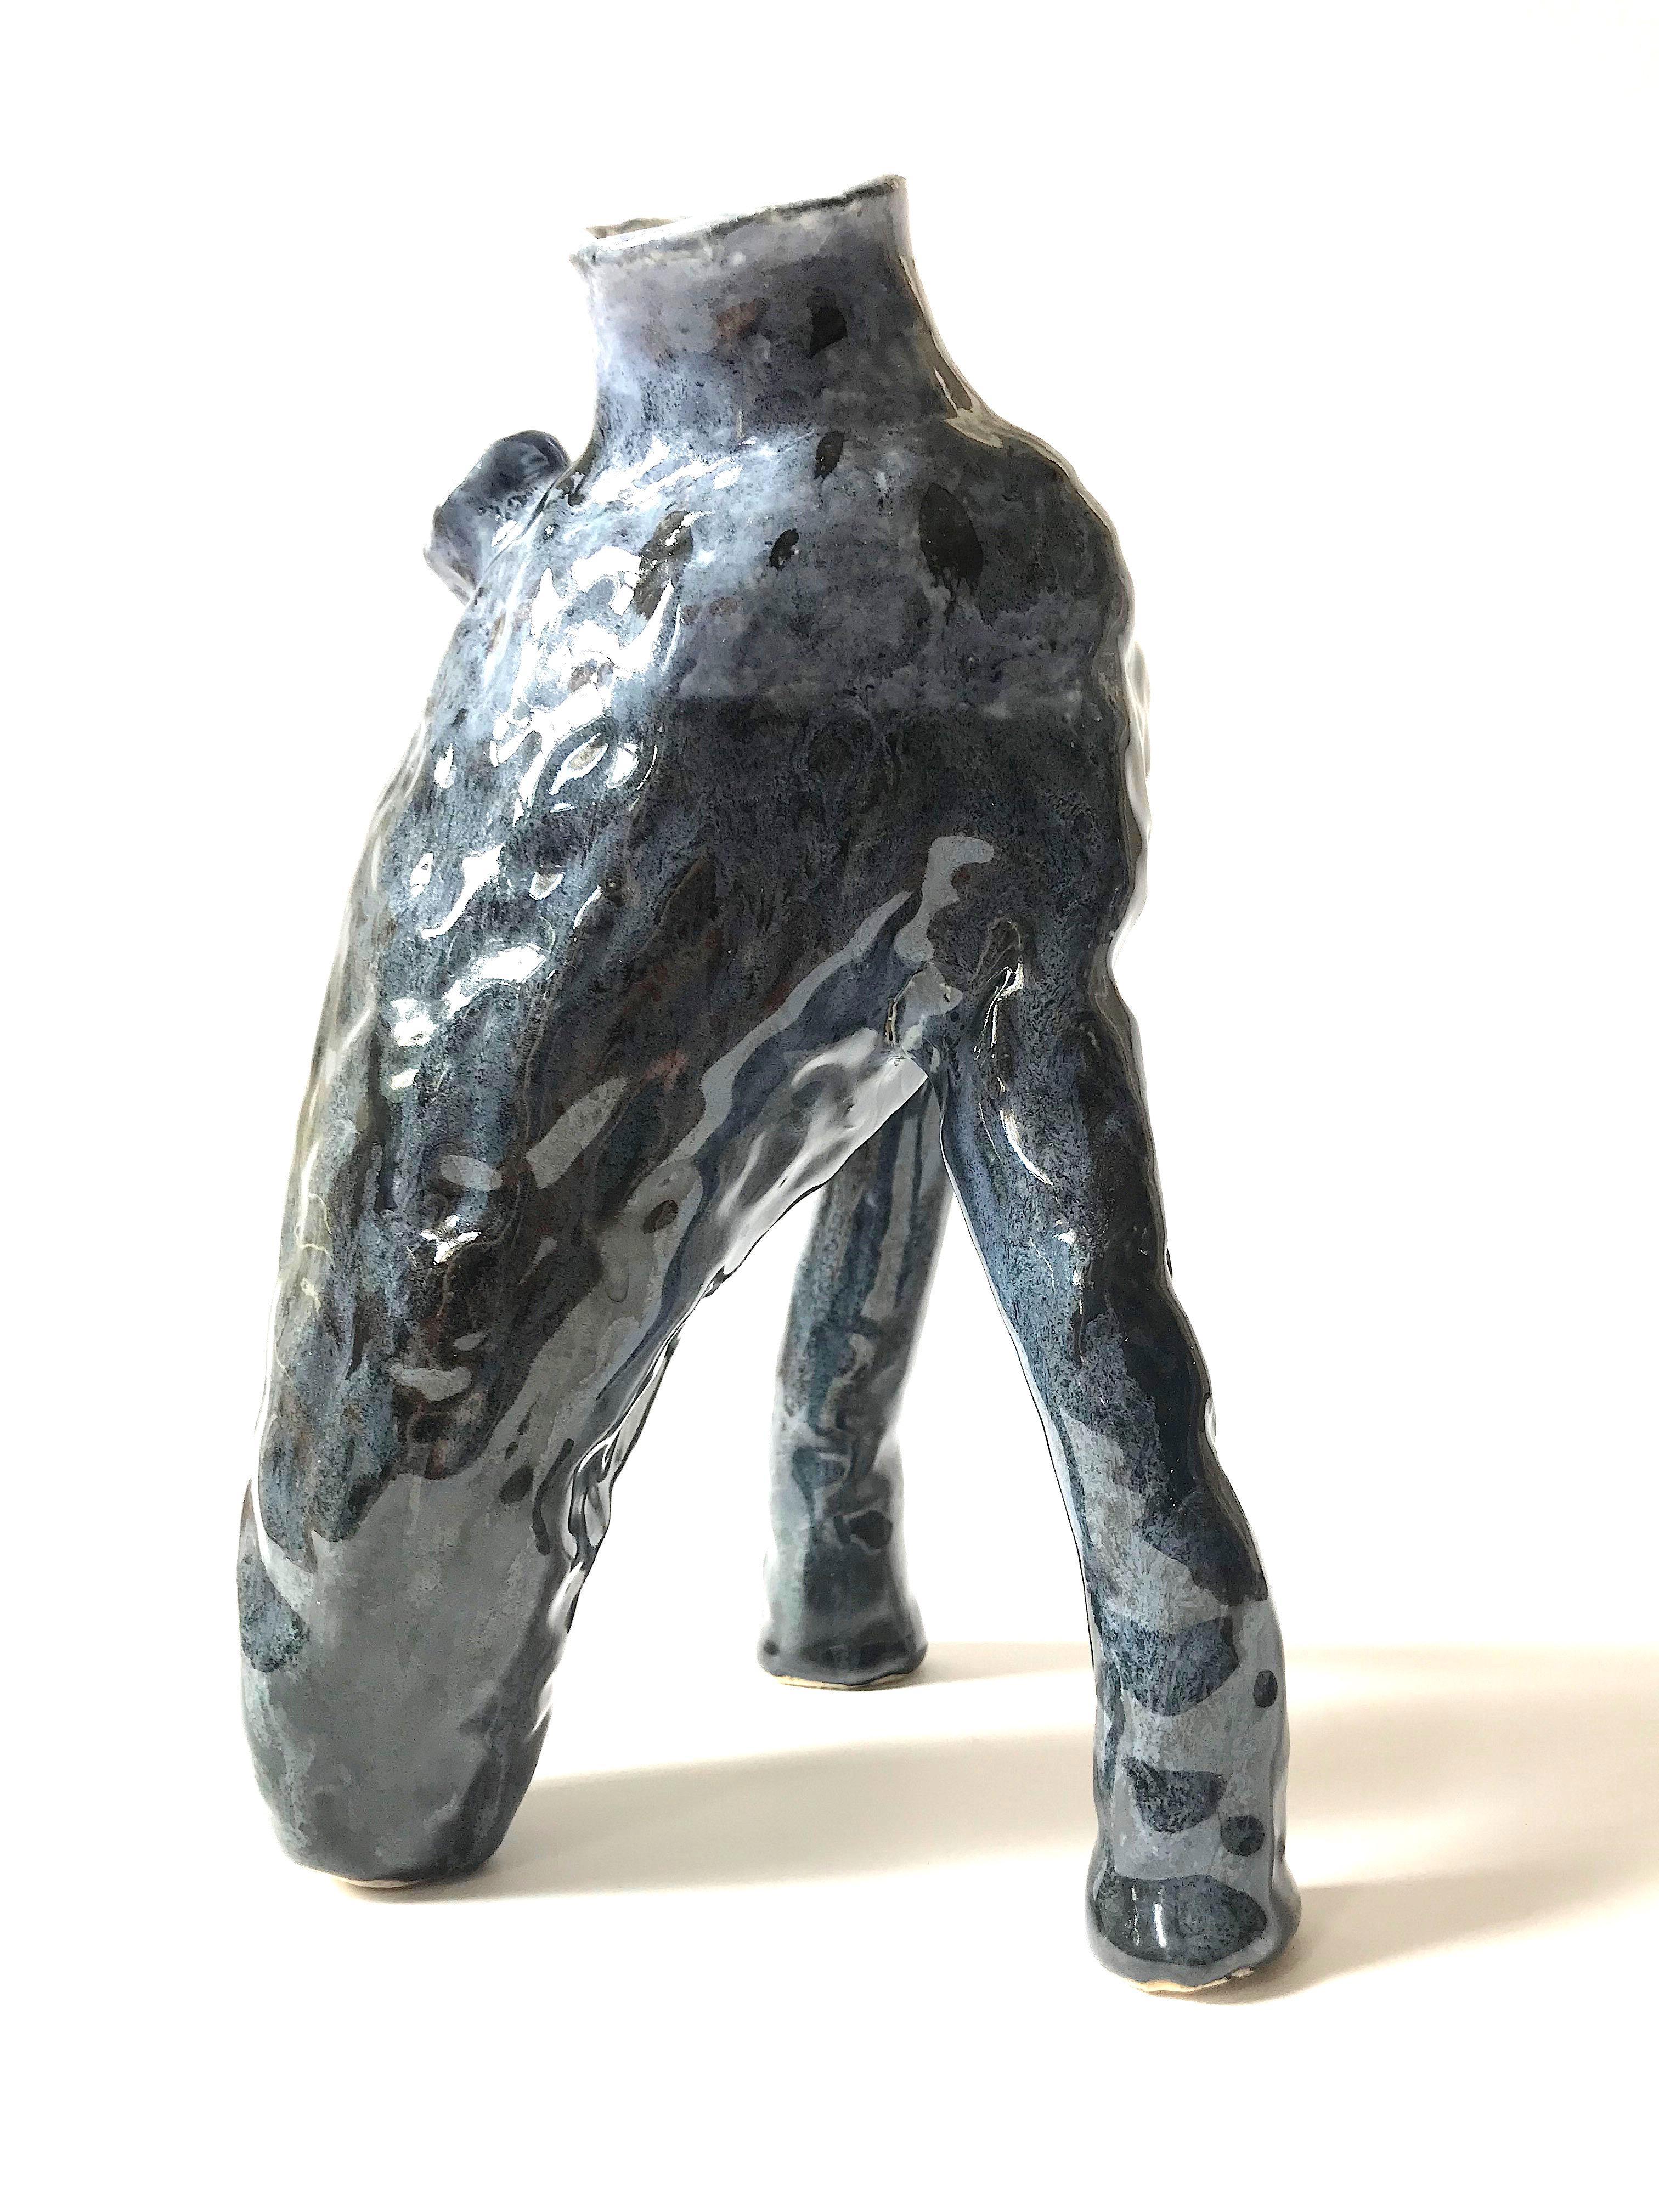 Abstract Ceramic Vessel Sculpture: 'Creature Medium No 11' - Gray Abstract Sculpture by Ak Jansen